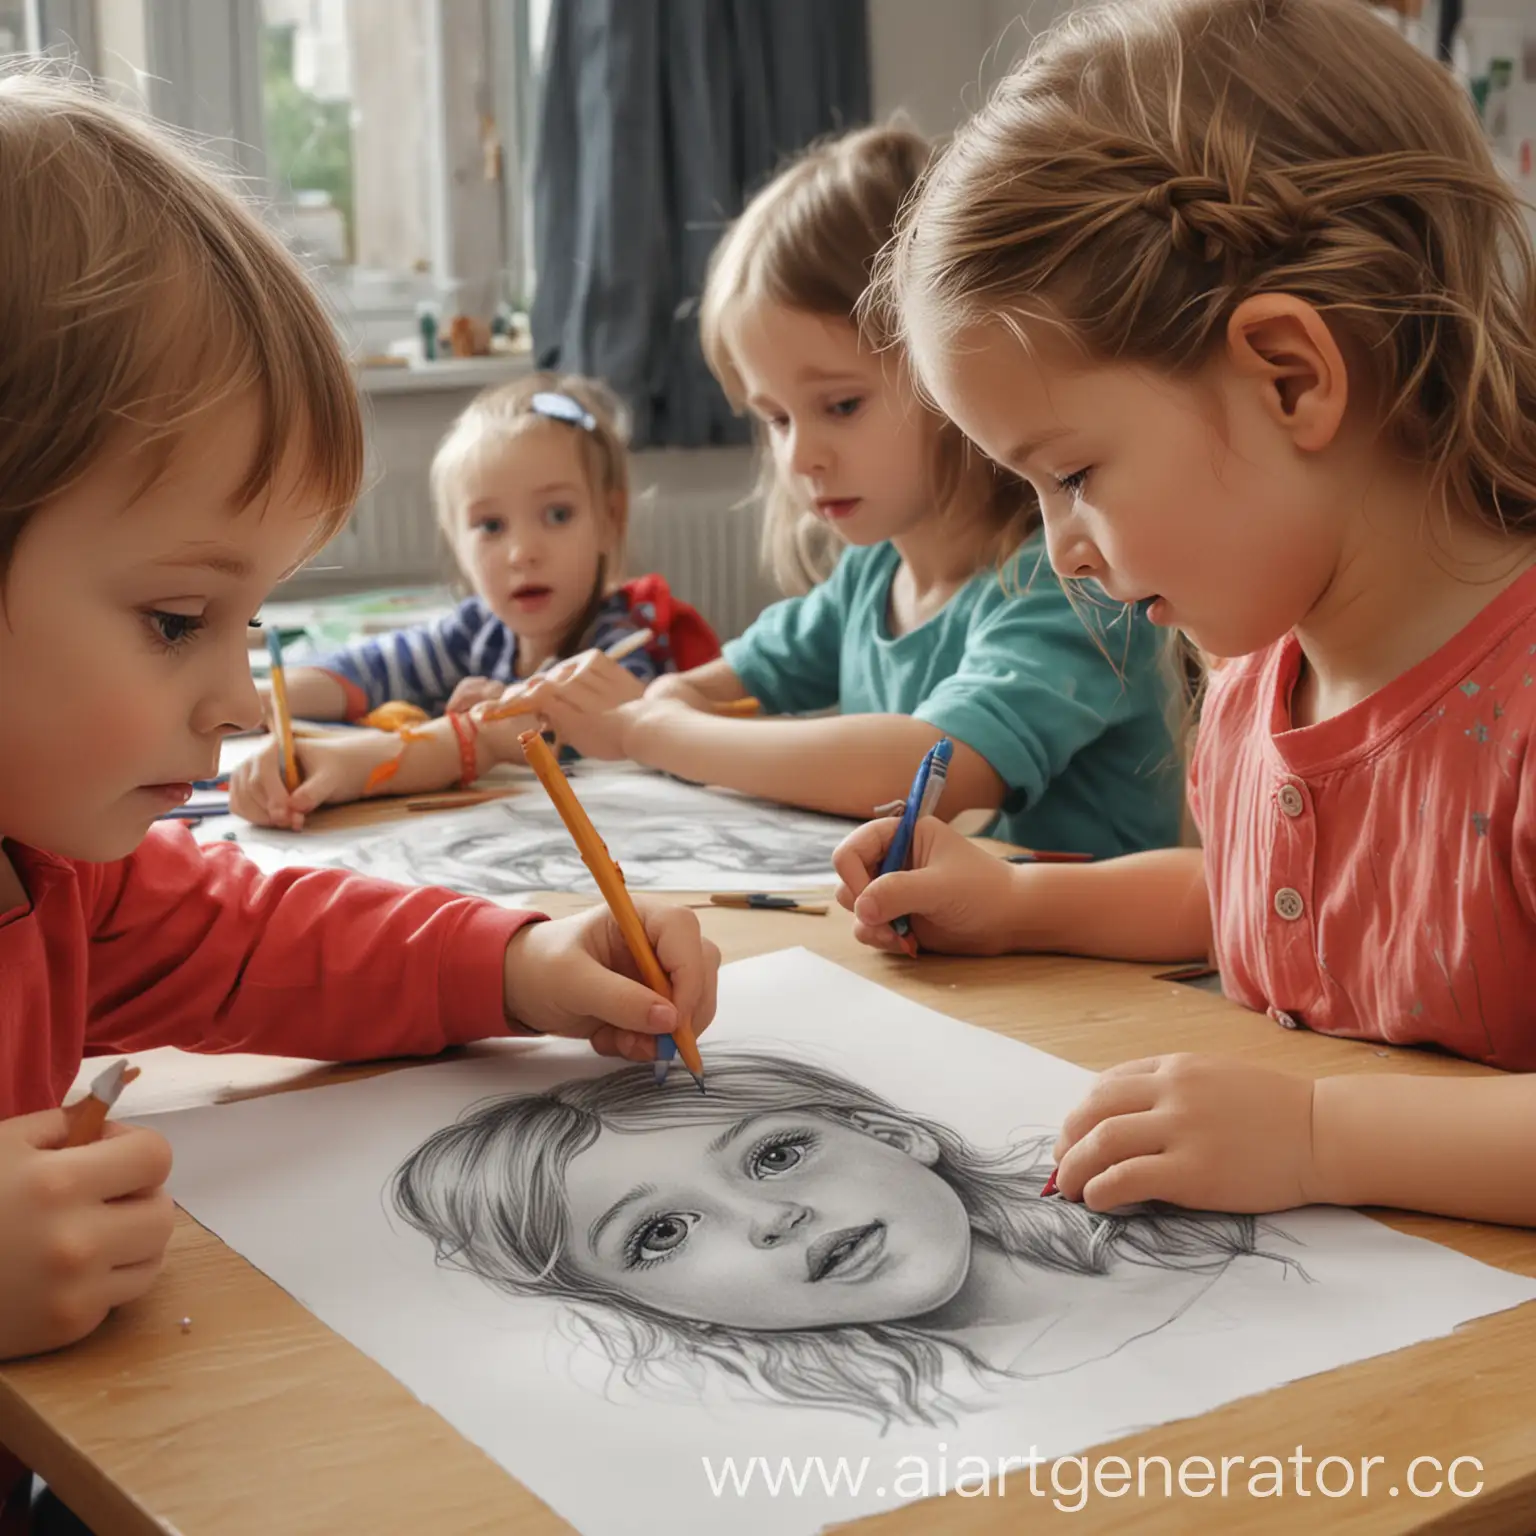 Kindergarten-Children-Drawing-in-Photorealistic-Style